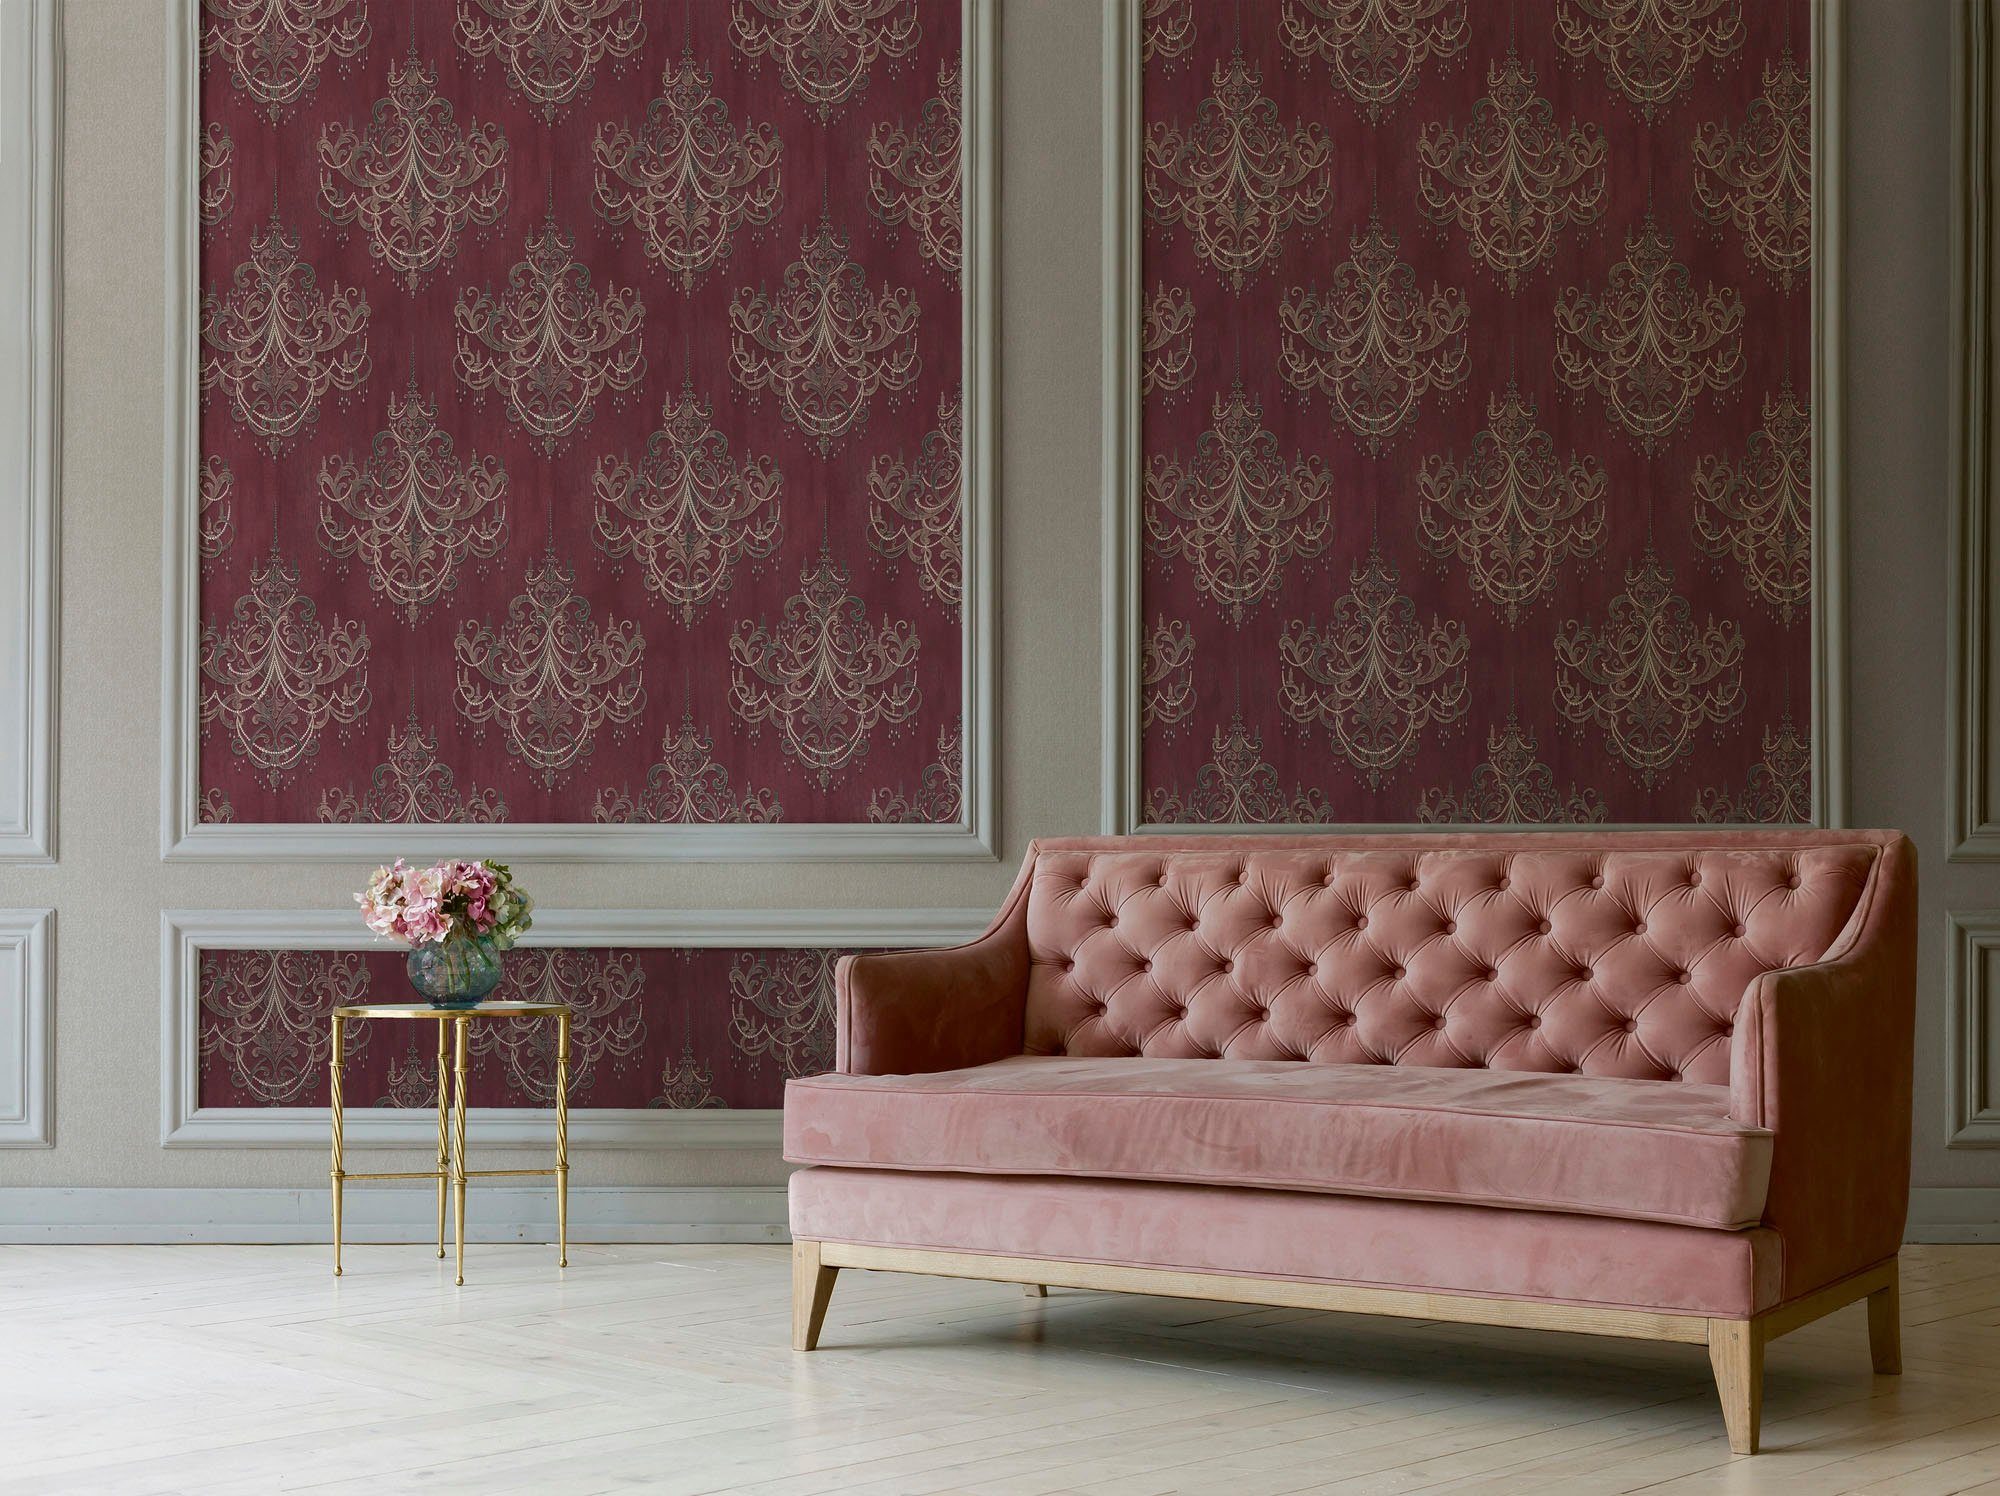 Mata living Hari, Barock walls Tapete Barock, Vliestapete Ornament ornamental, strukturiert, gemustert, dunkelrot/rosa